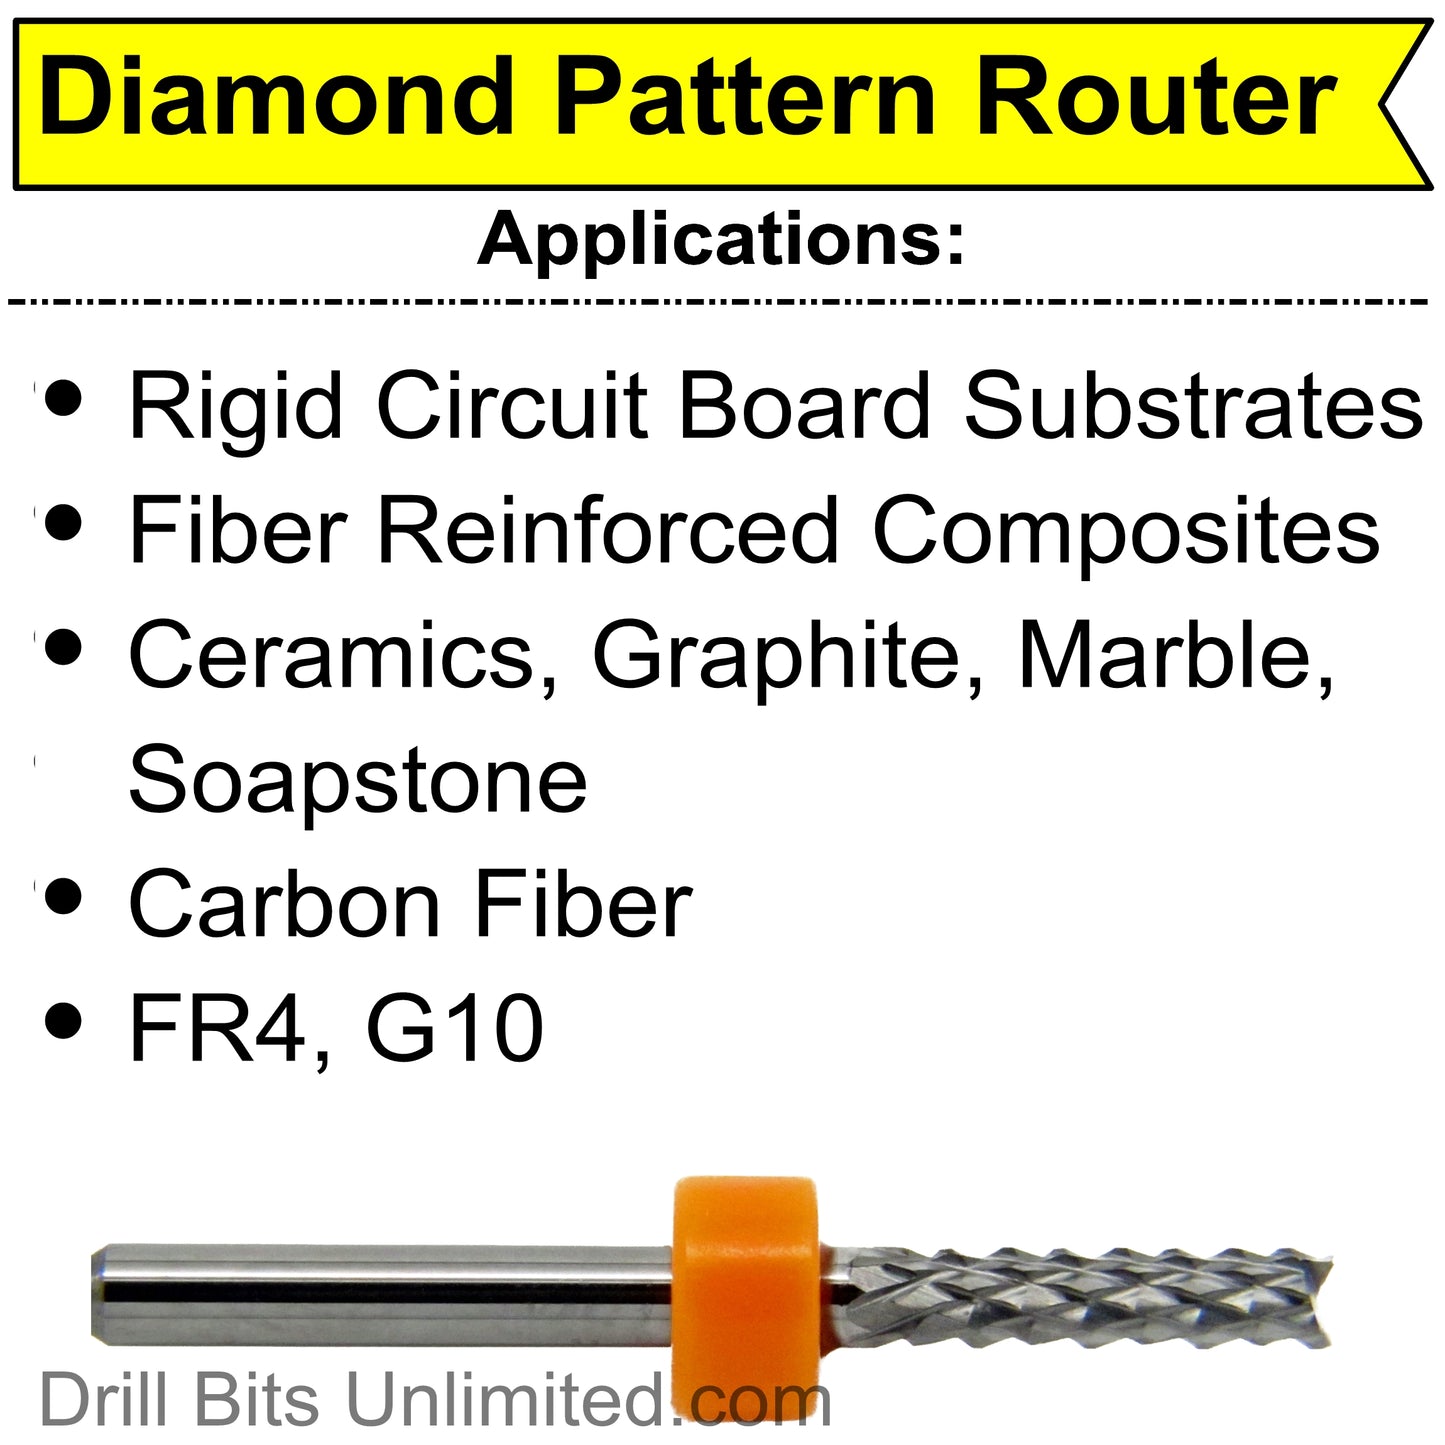 .0787" 5/64" 2.00mm x .400" LOC Diamond Pattern Carbide Router Bit - Fish Tail Tip R138